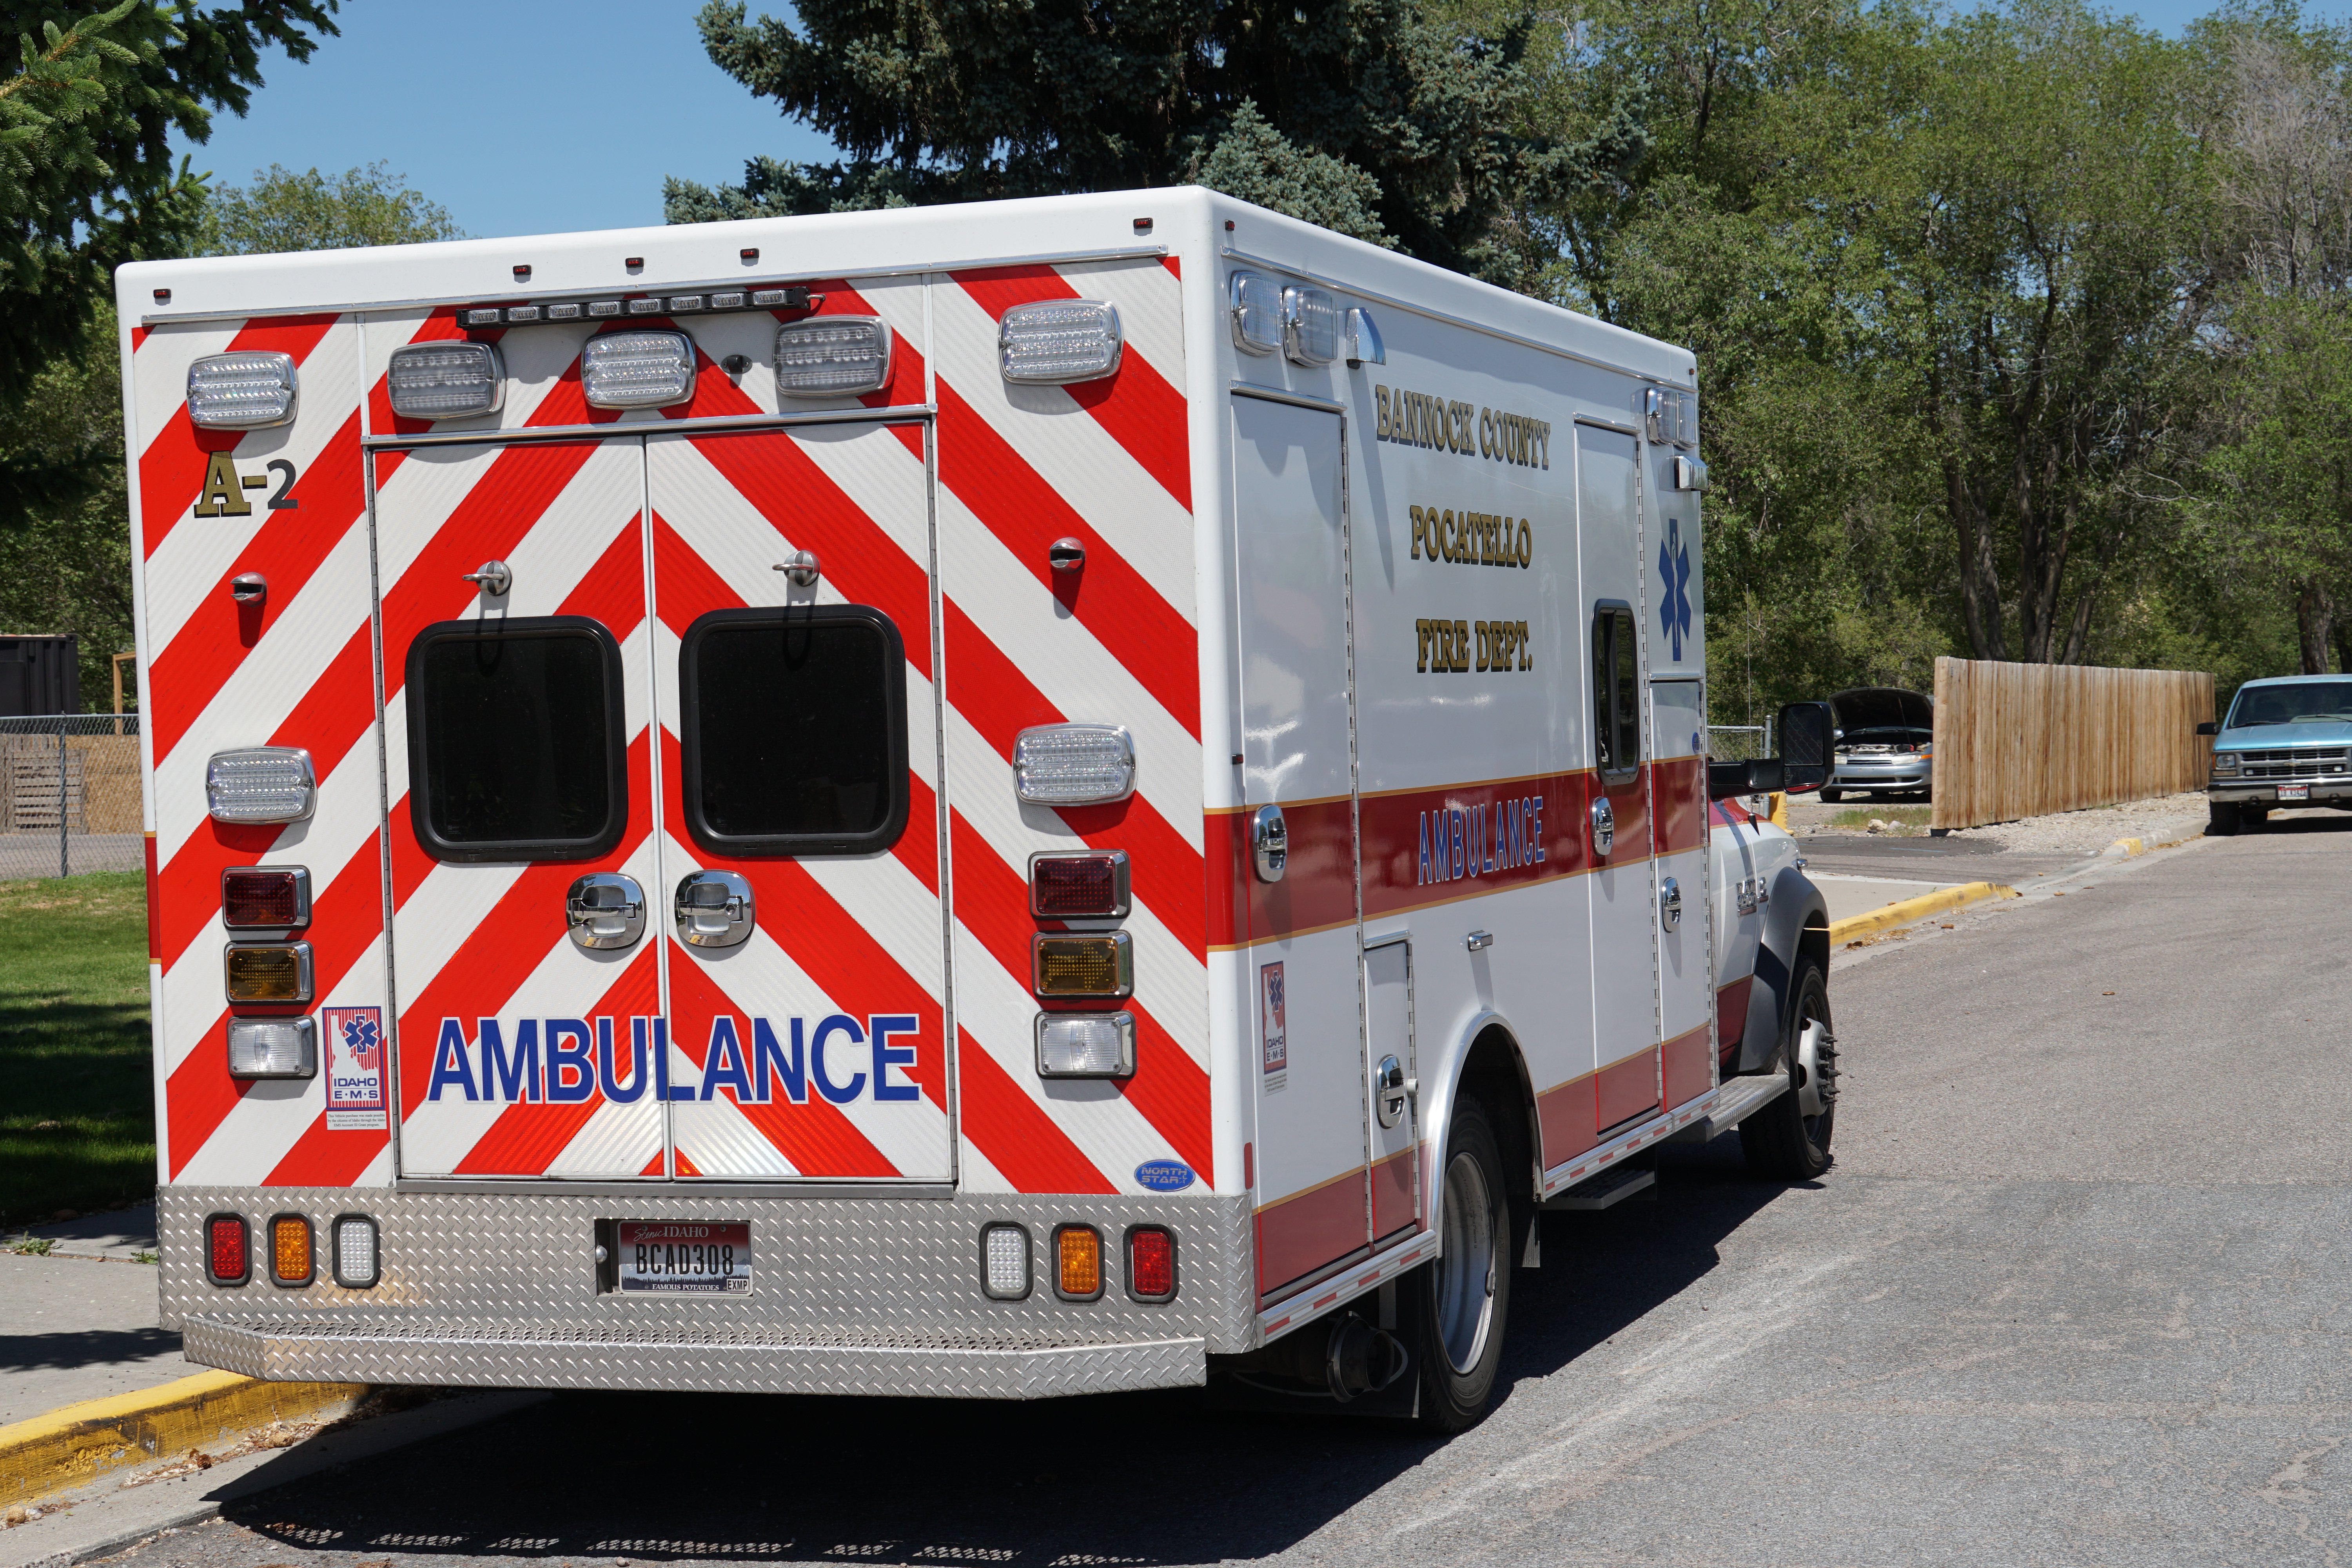 Ambulance parked on street